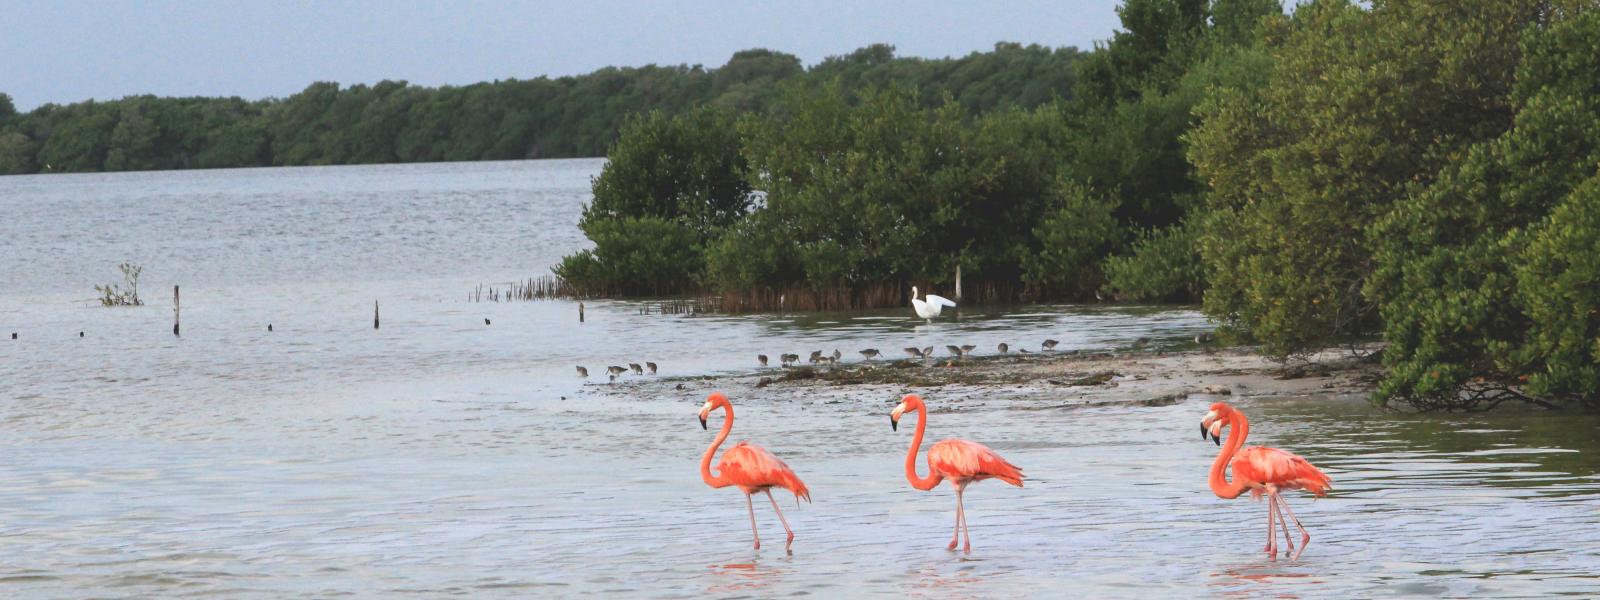 Diversidad de especies de aves en Yum Balam, aréa natural protegida en México